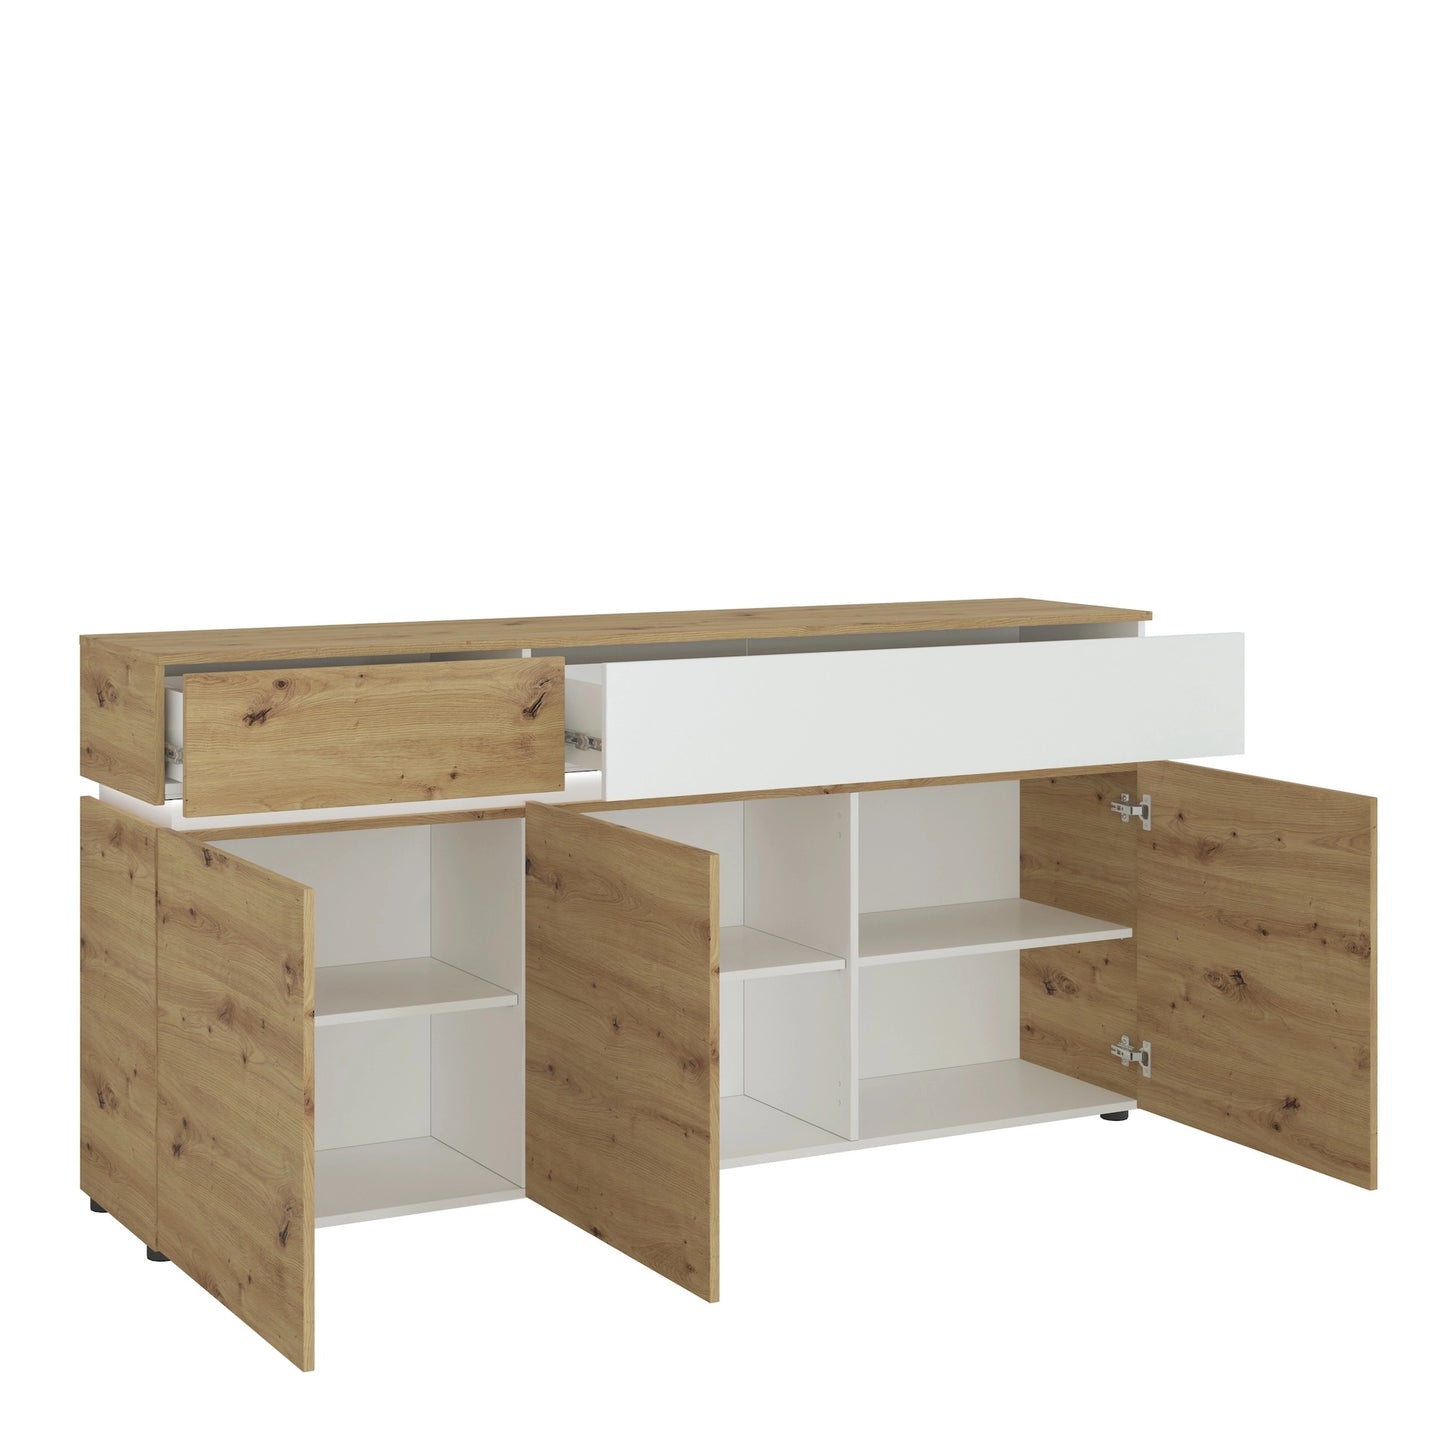 Furniture To Go Luci 3 Door 2 Drawer Sideboard (Including Led Lighting) in White & Oak